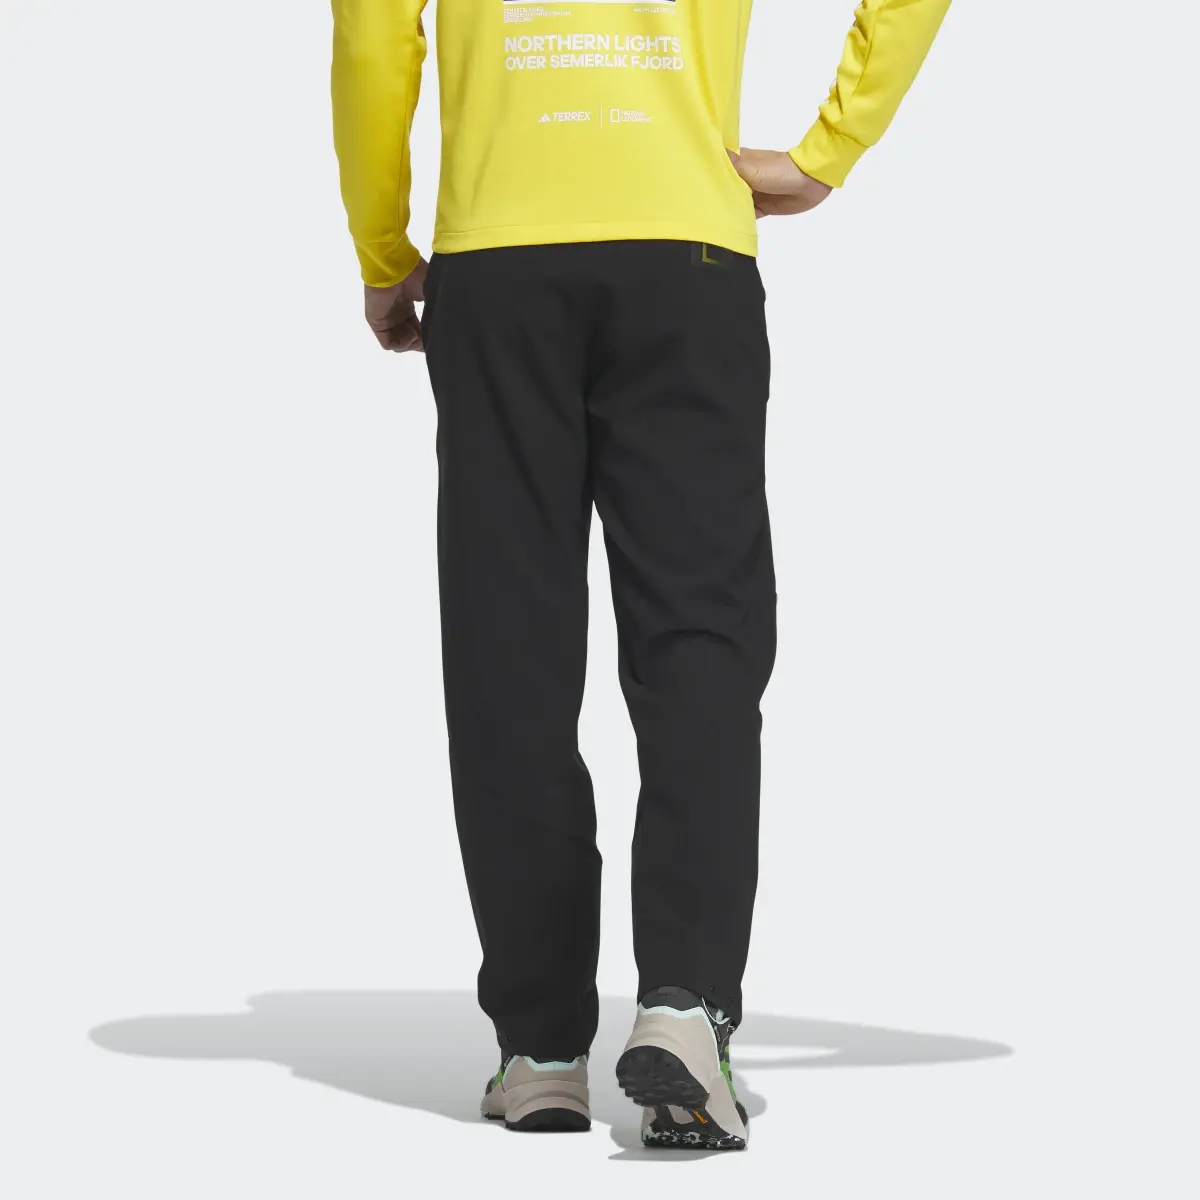 Adidas Spodnie National Geographic Soft Shell. 2